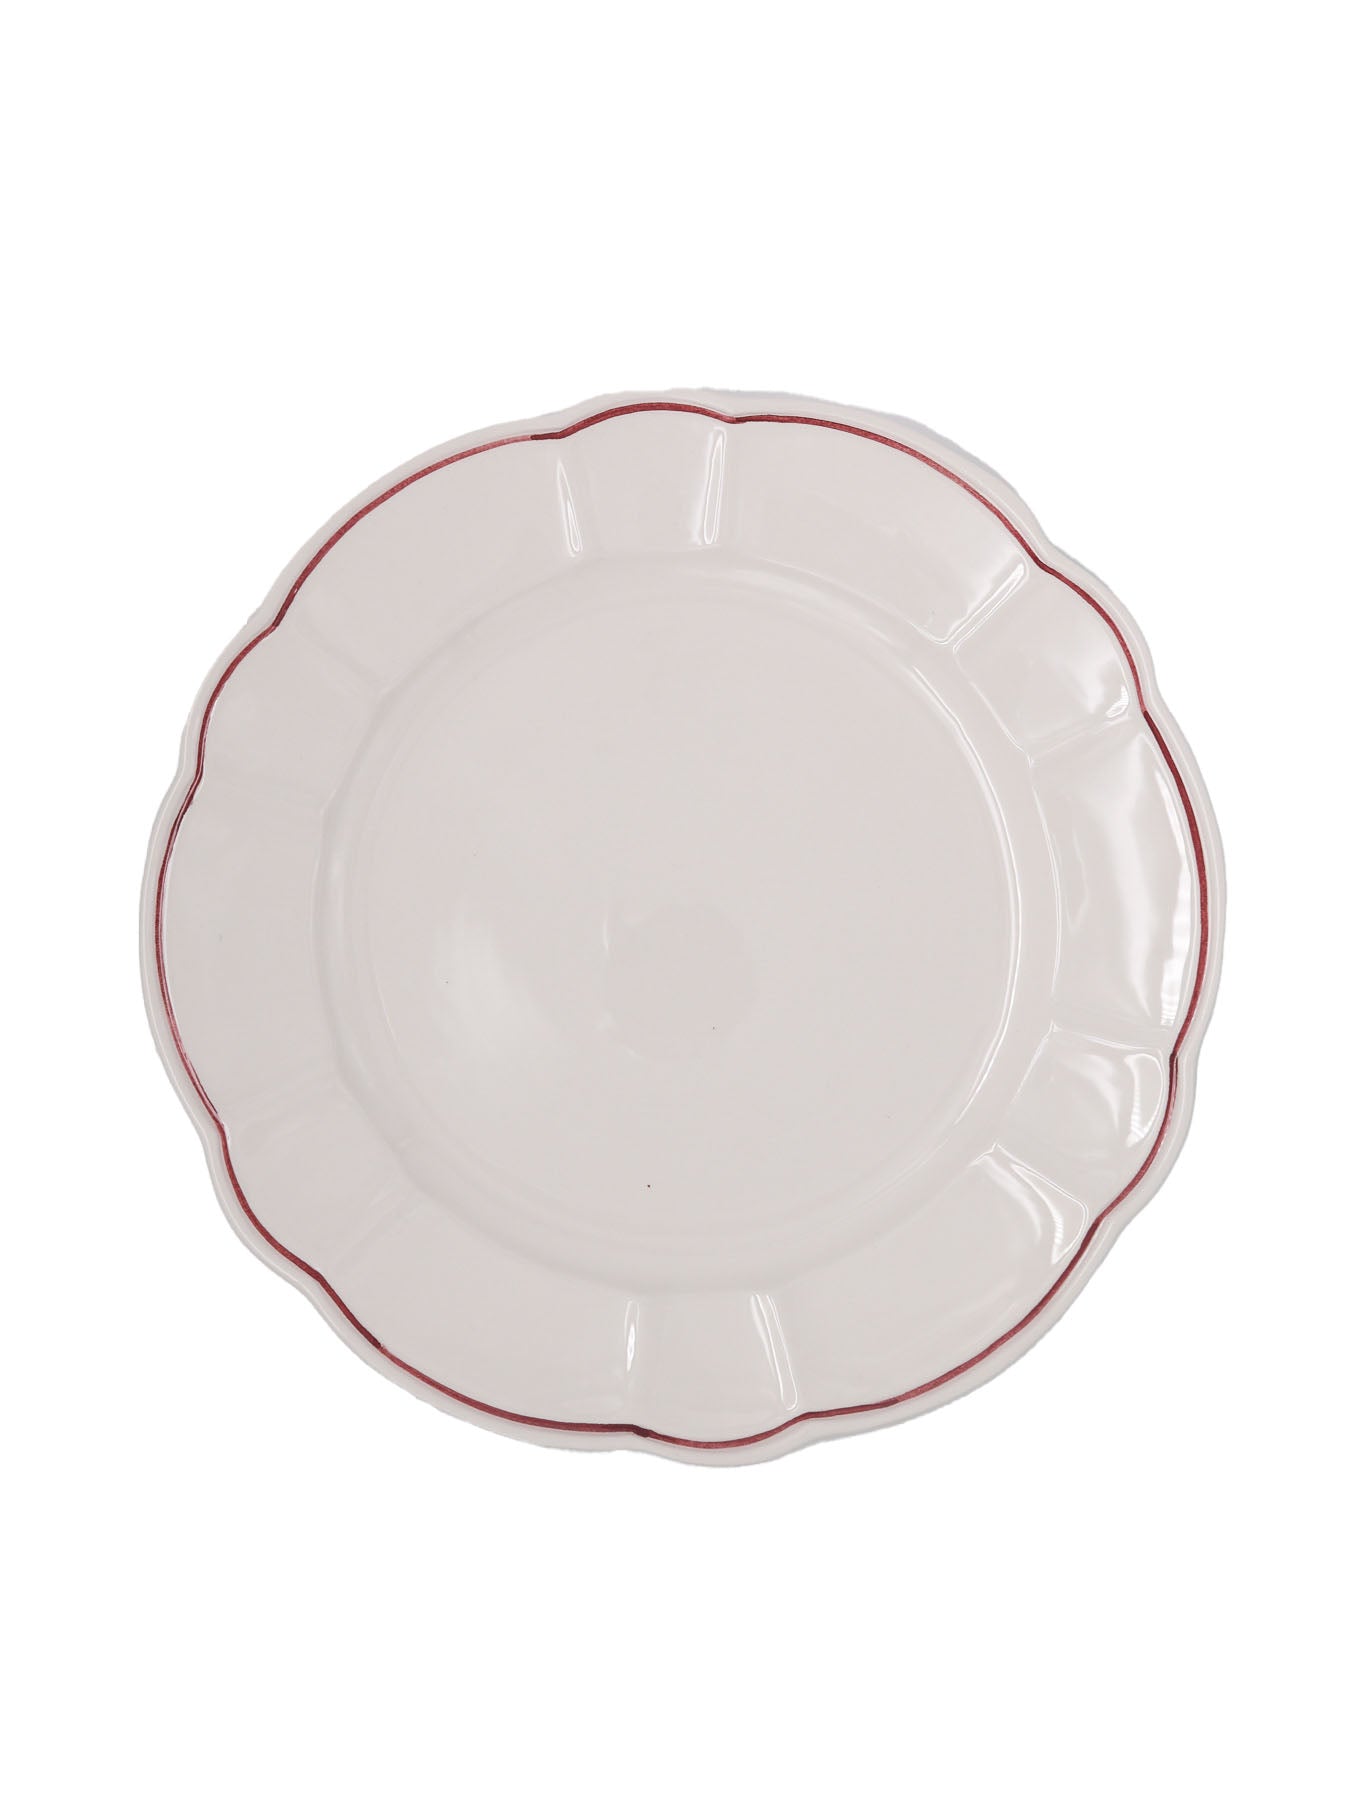 Romilly Dinner Plate, Red - Skye McAlpine Tavola